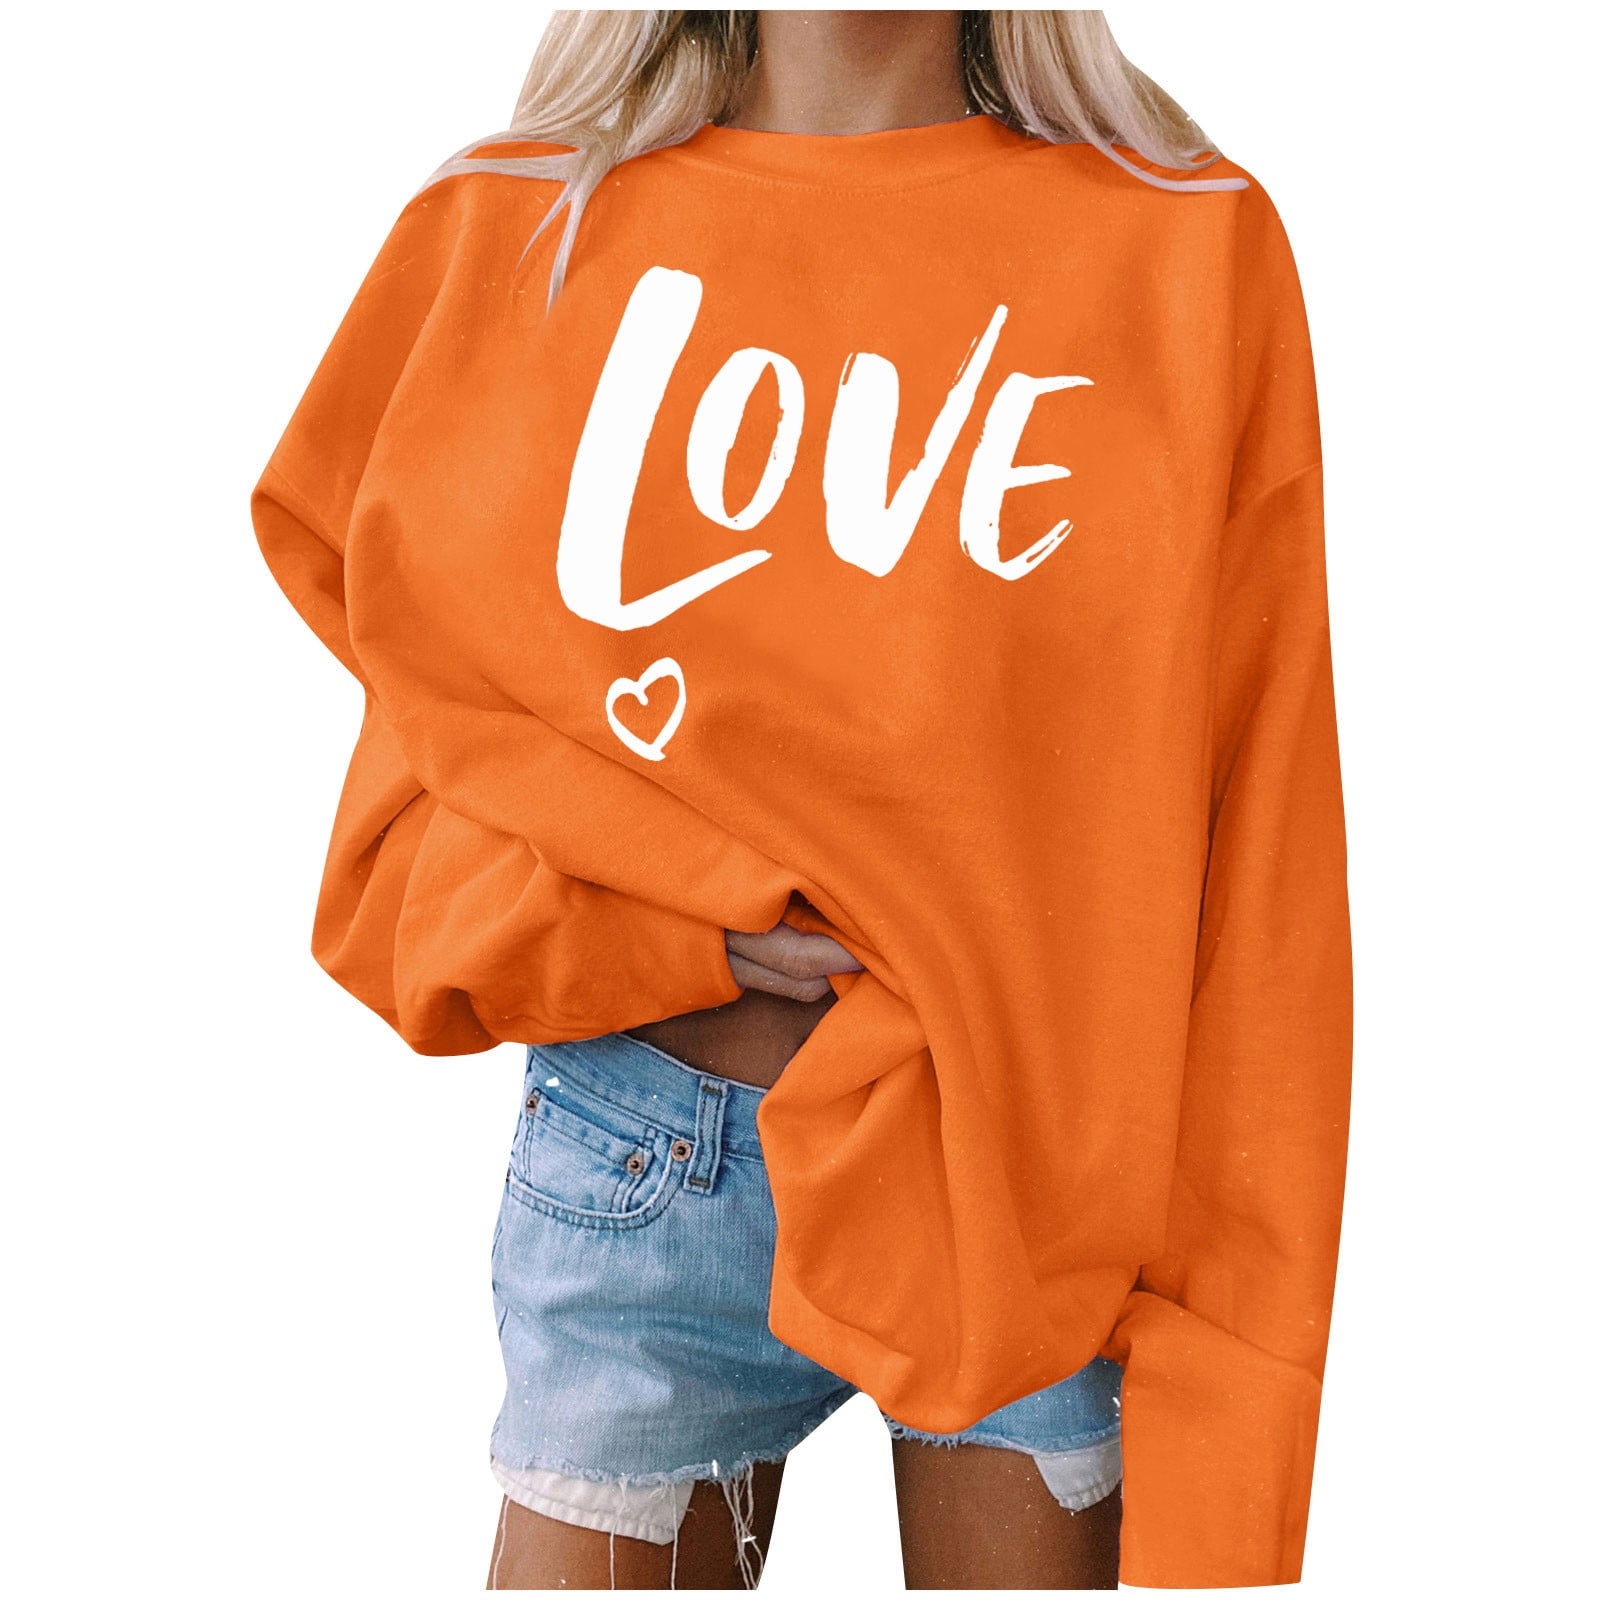 Brglopf Women Sweatshirt Long Sleeve Crew Neck Pullover Love Letter Printed  Sweatshirt Lightweight Tops Blouse